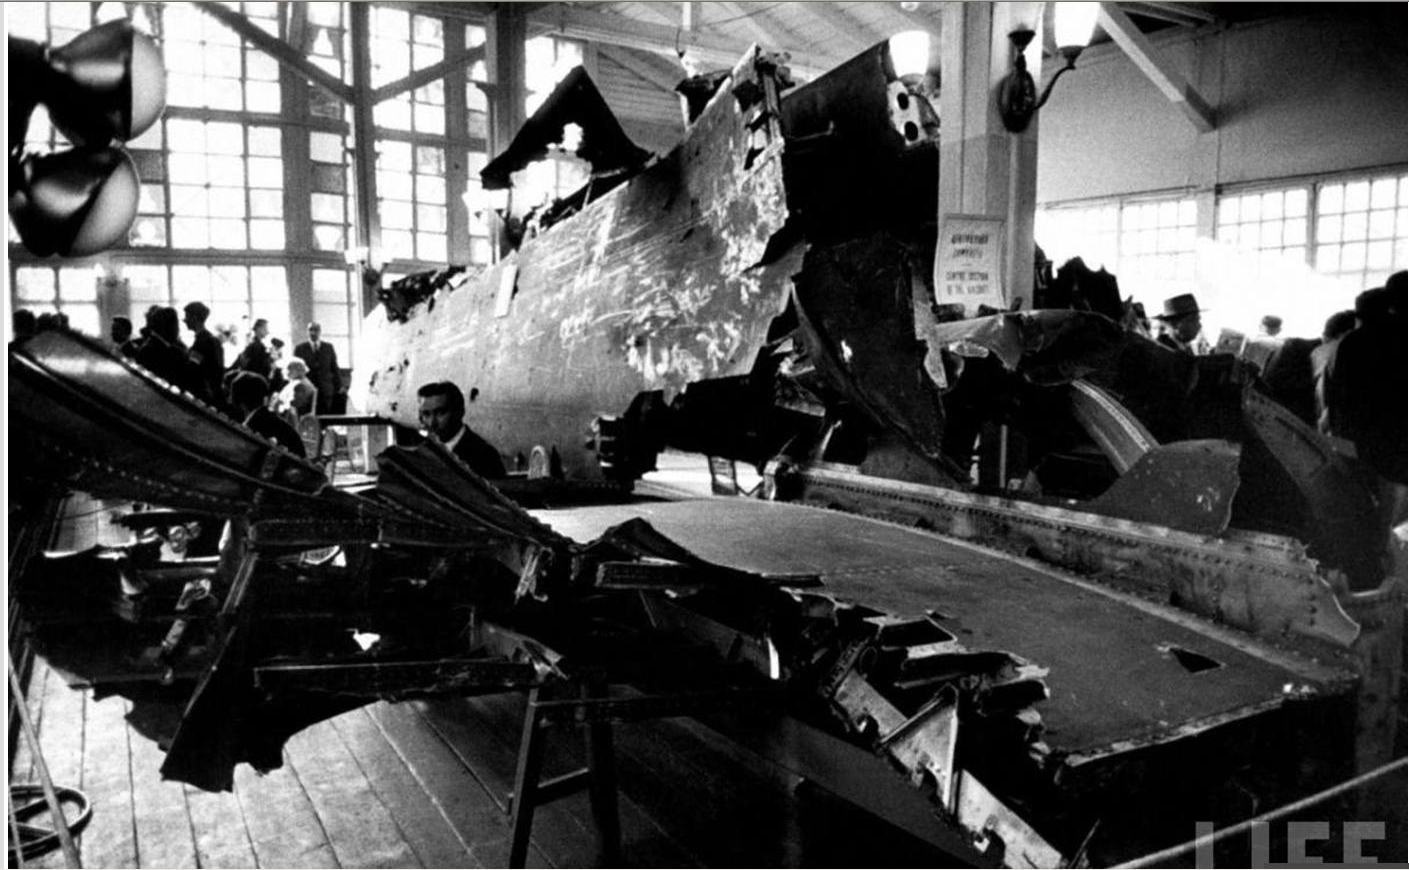 360-wreckage-in-moscow-via-phil-boyden-mar14.jpg